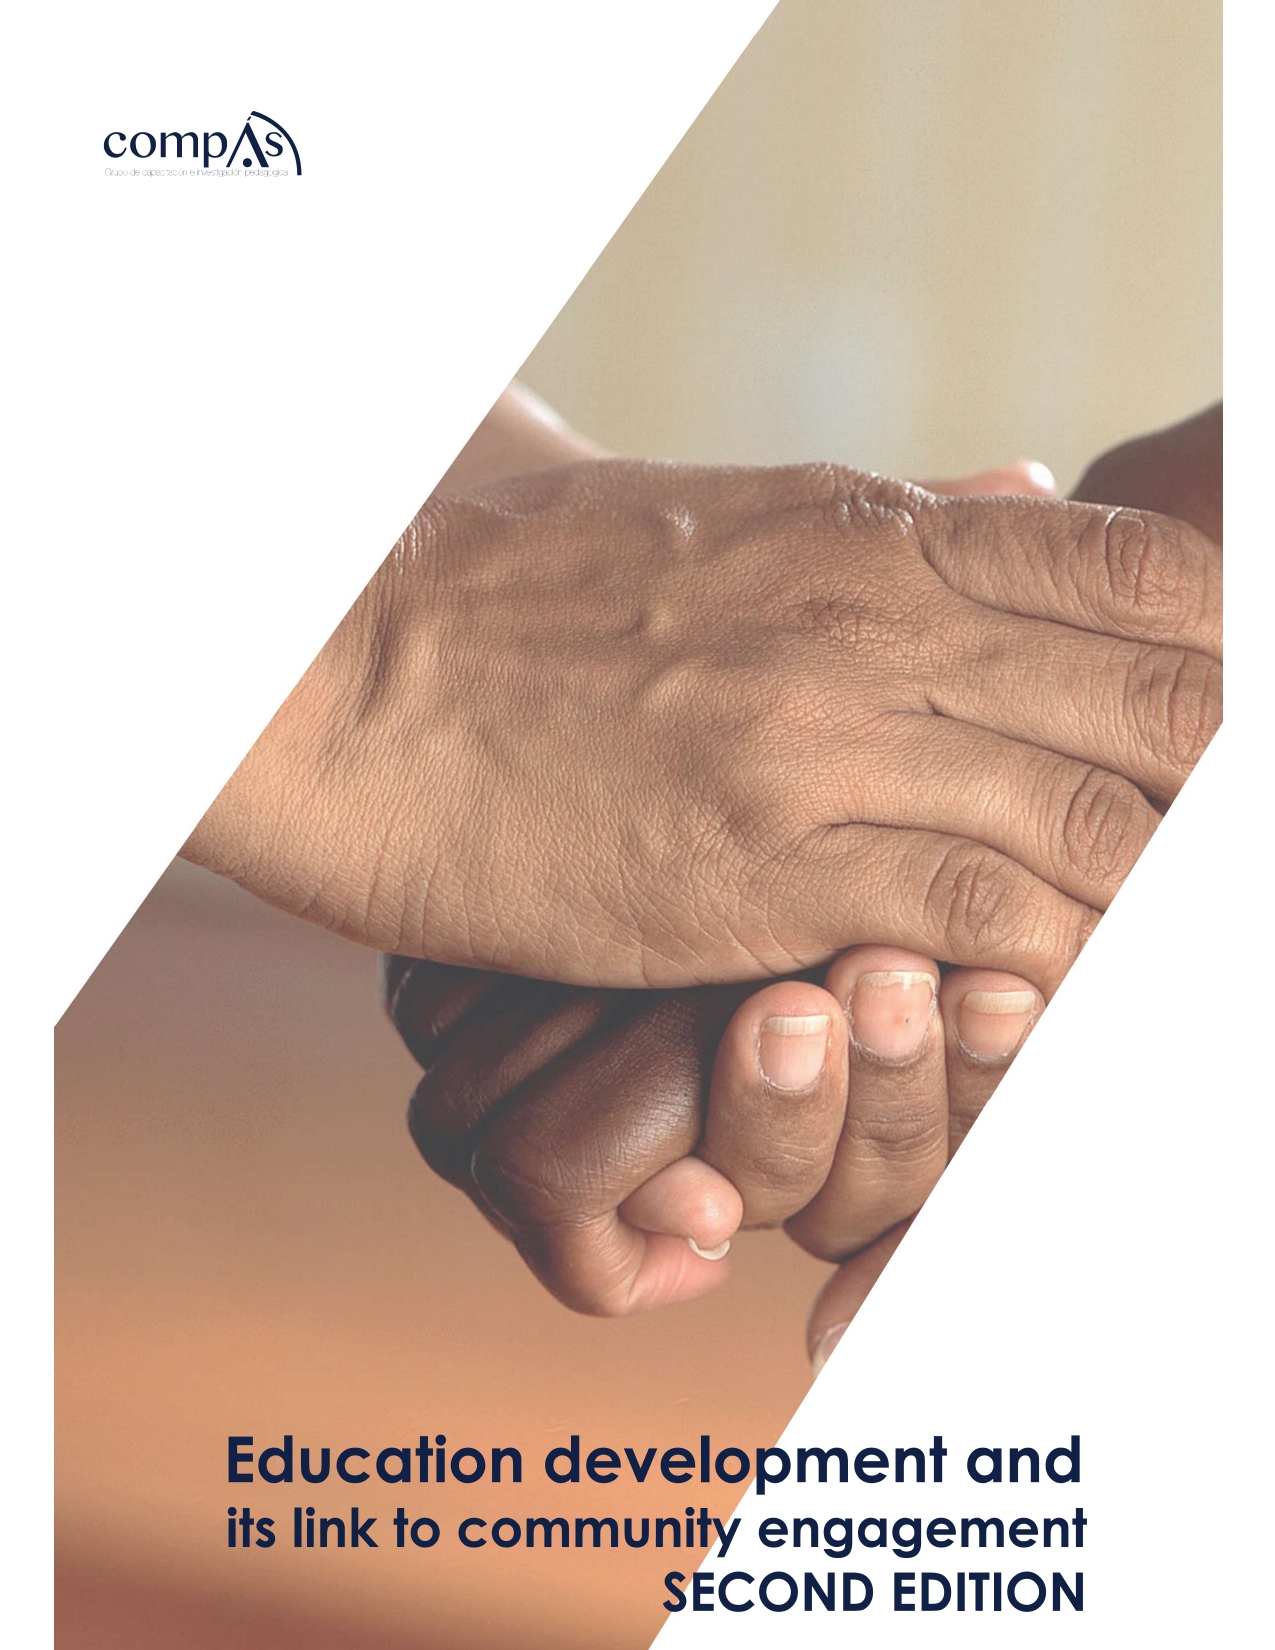 Imagen de portada del libro Education development and its link to community engagement second edition